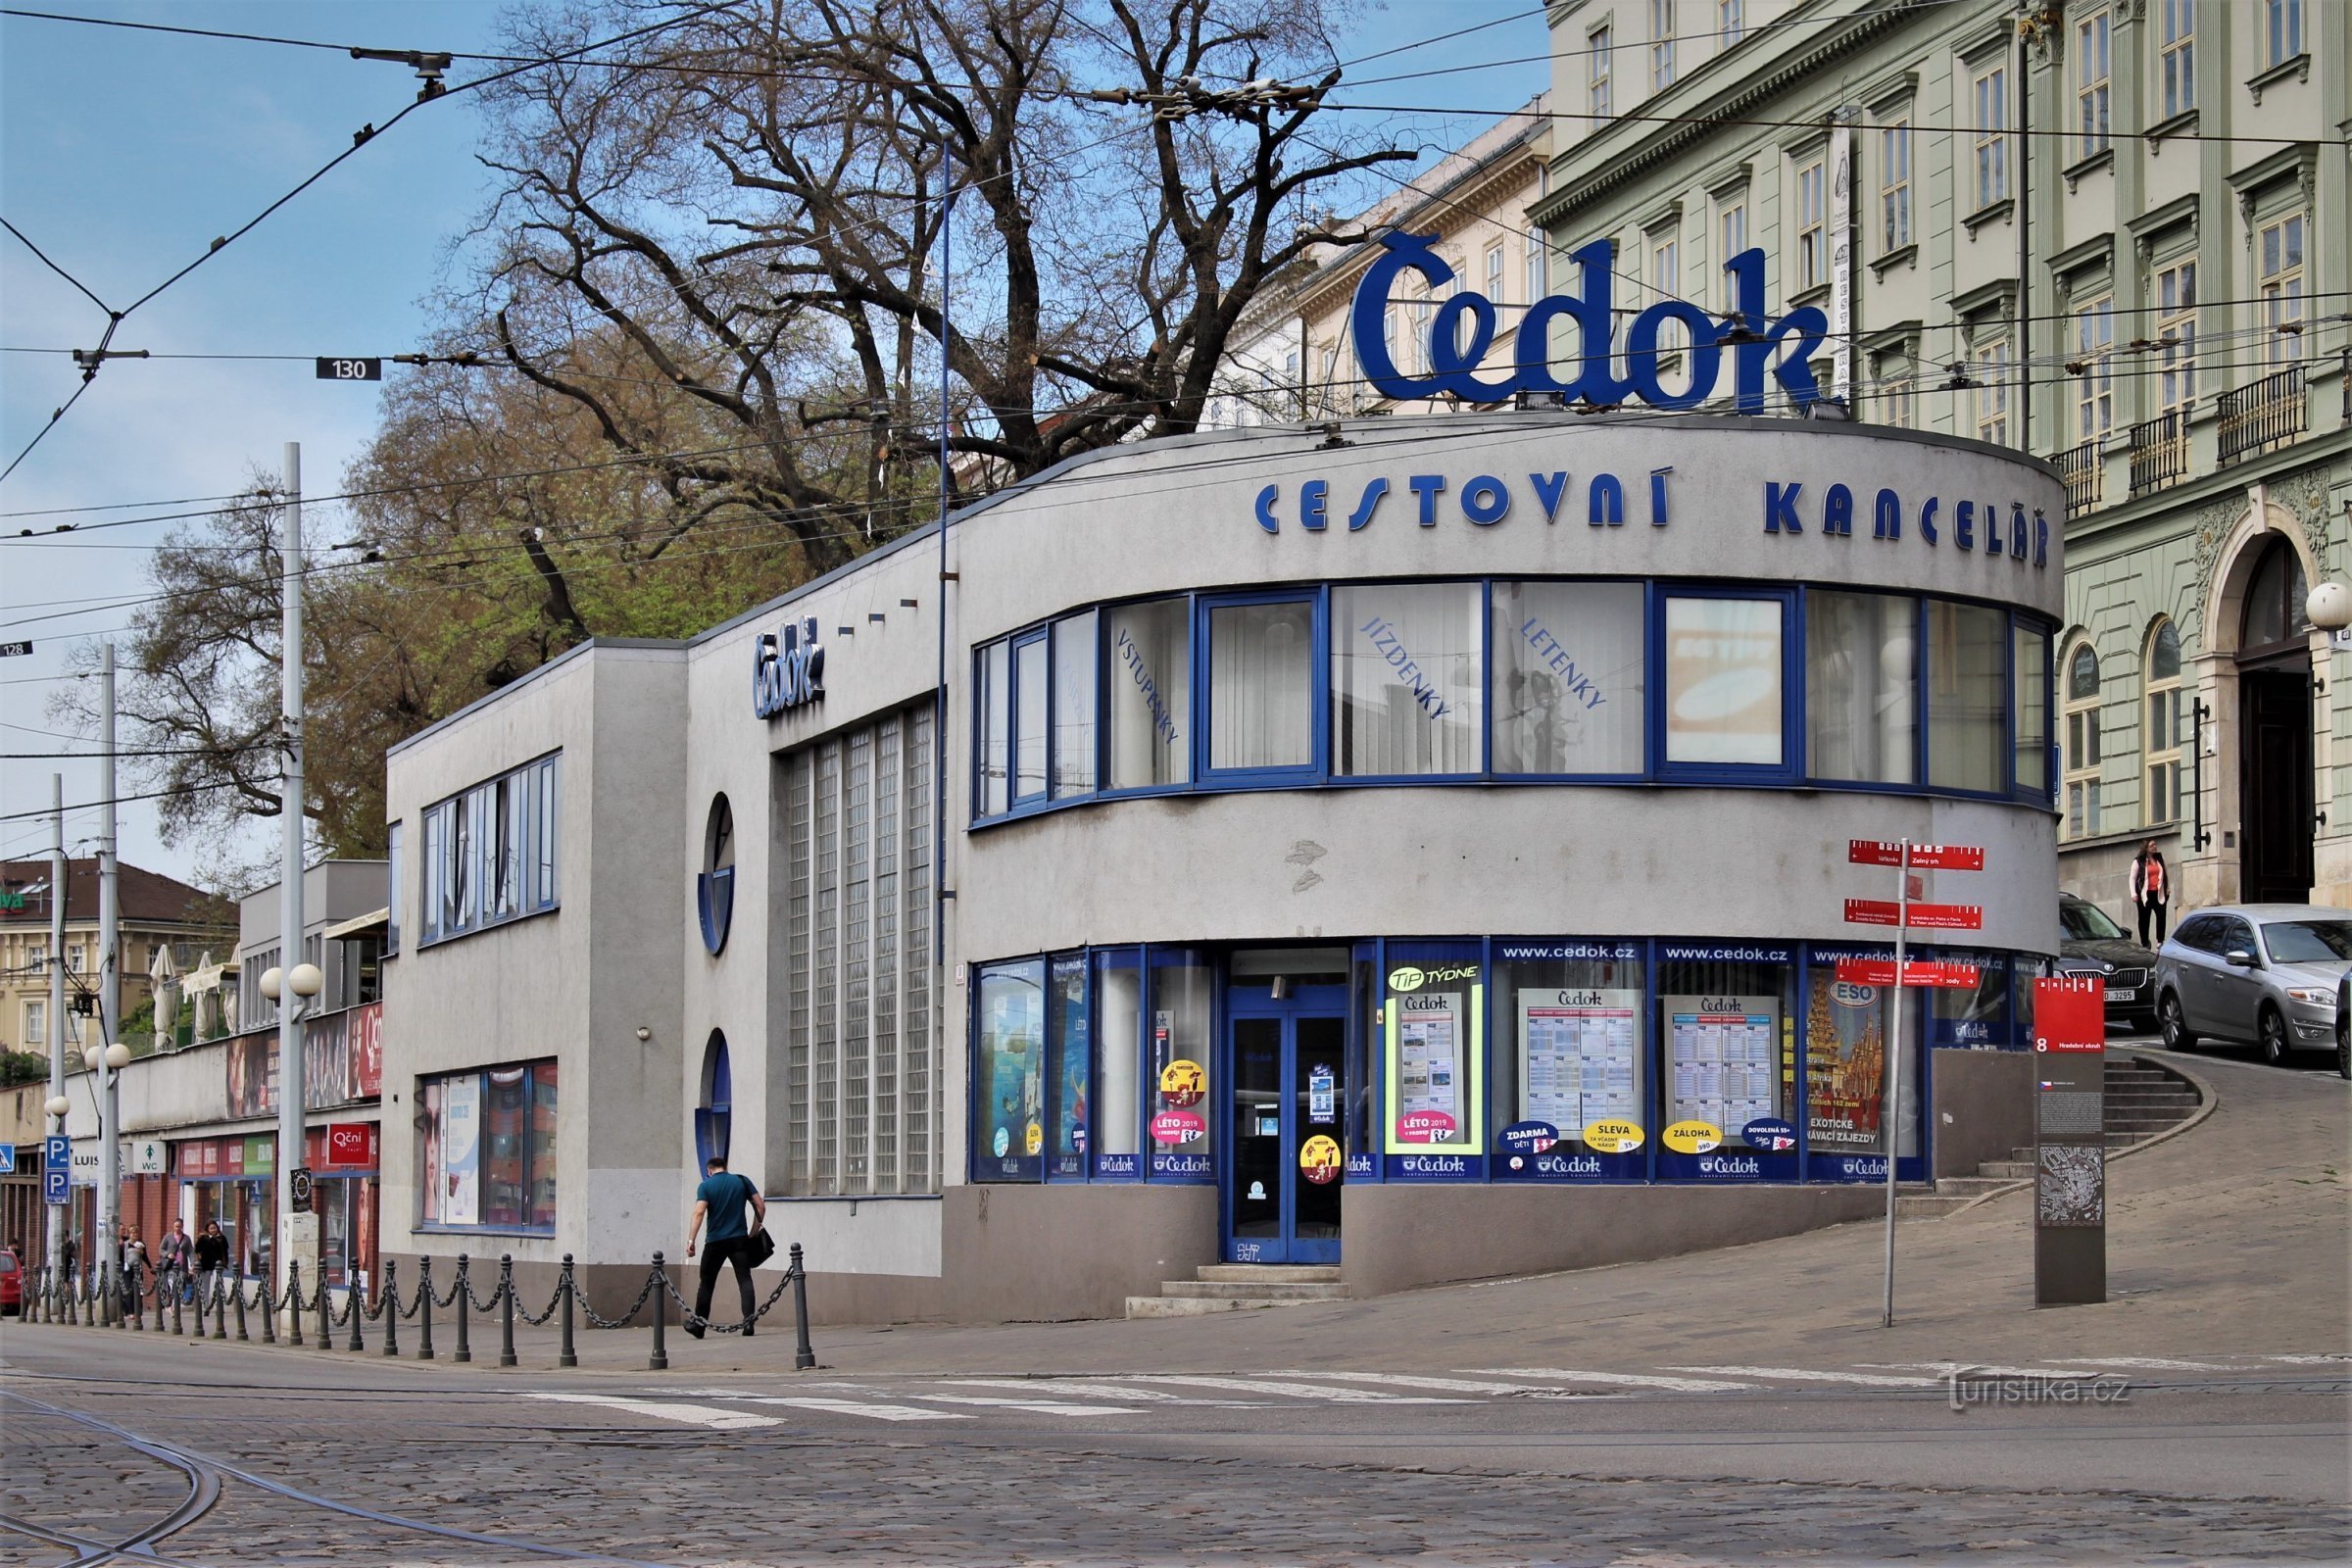 Brno - Čedok bygning